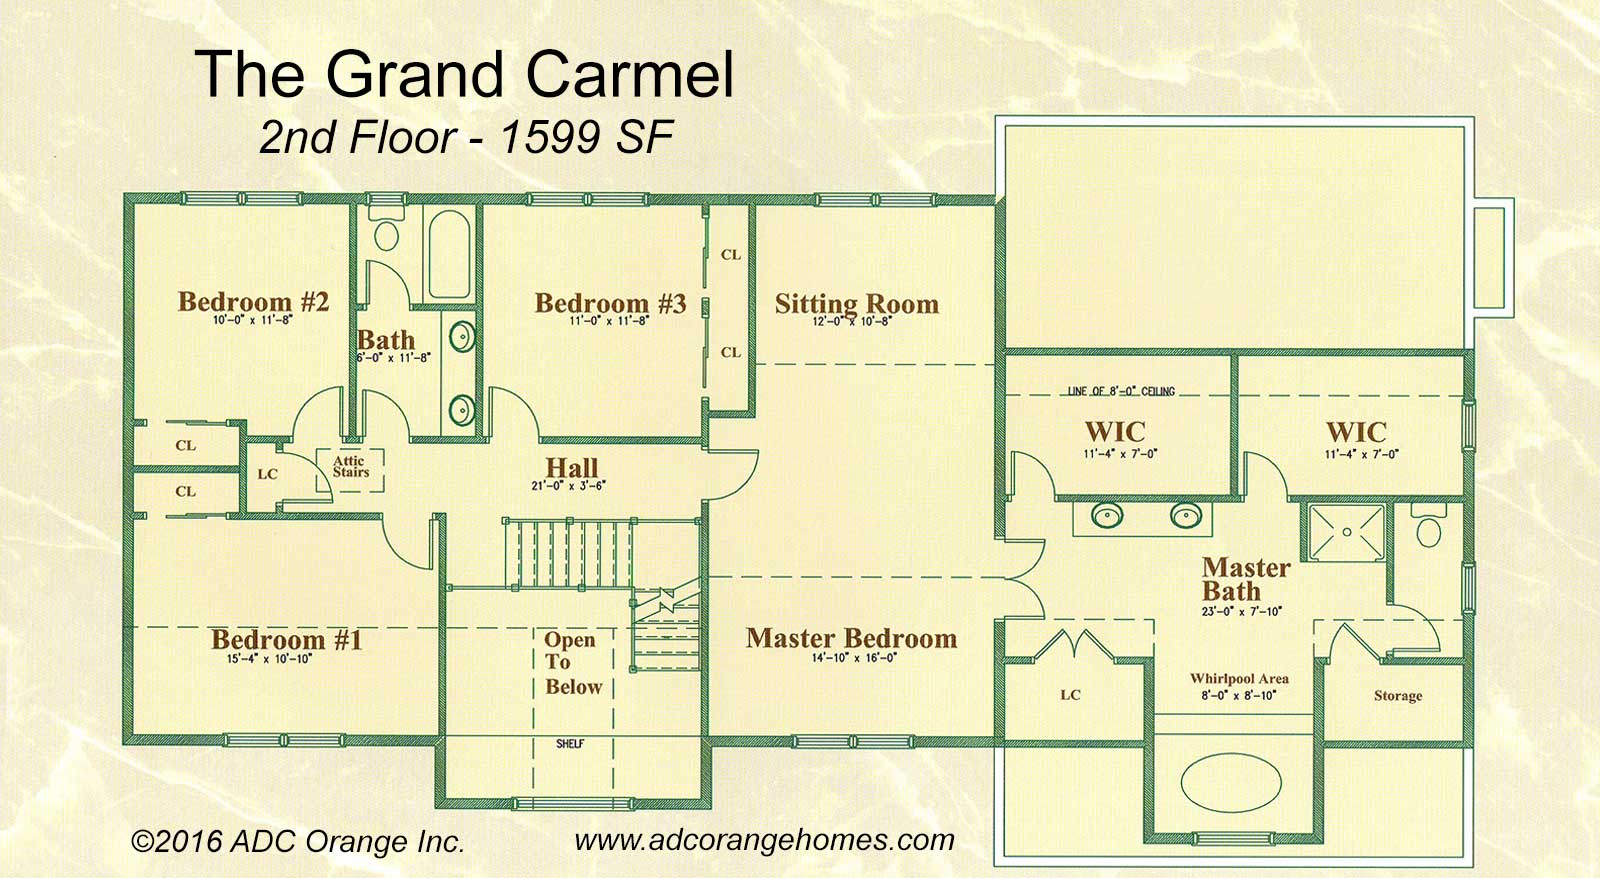 2nd Floor Plan for Grand Carmel - New Home in Orange County, New York